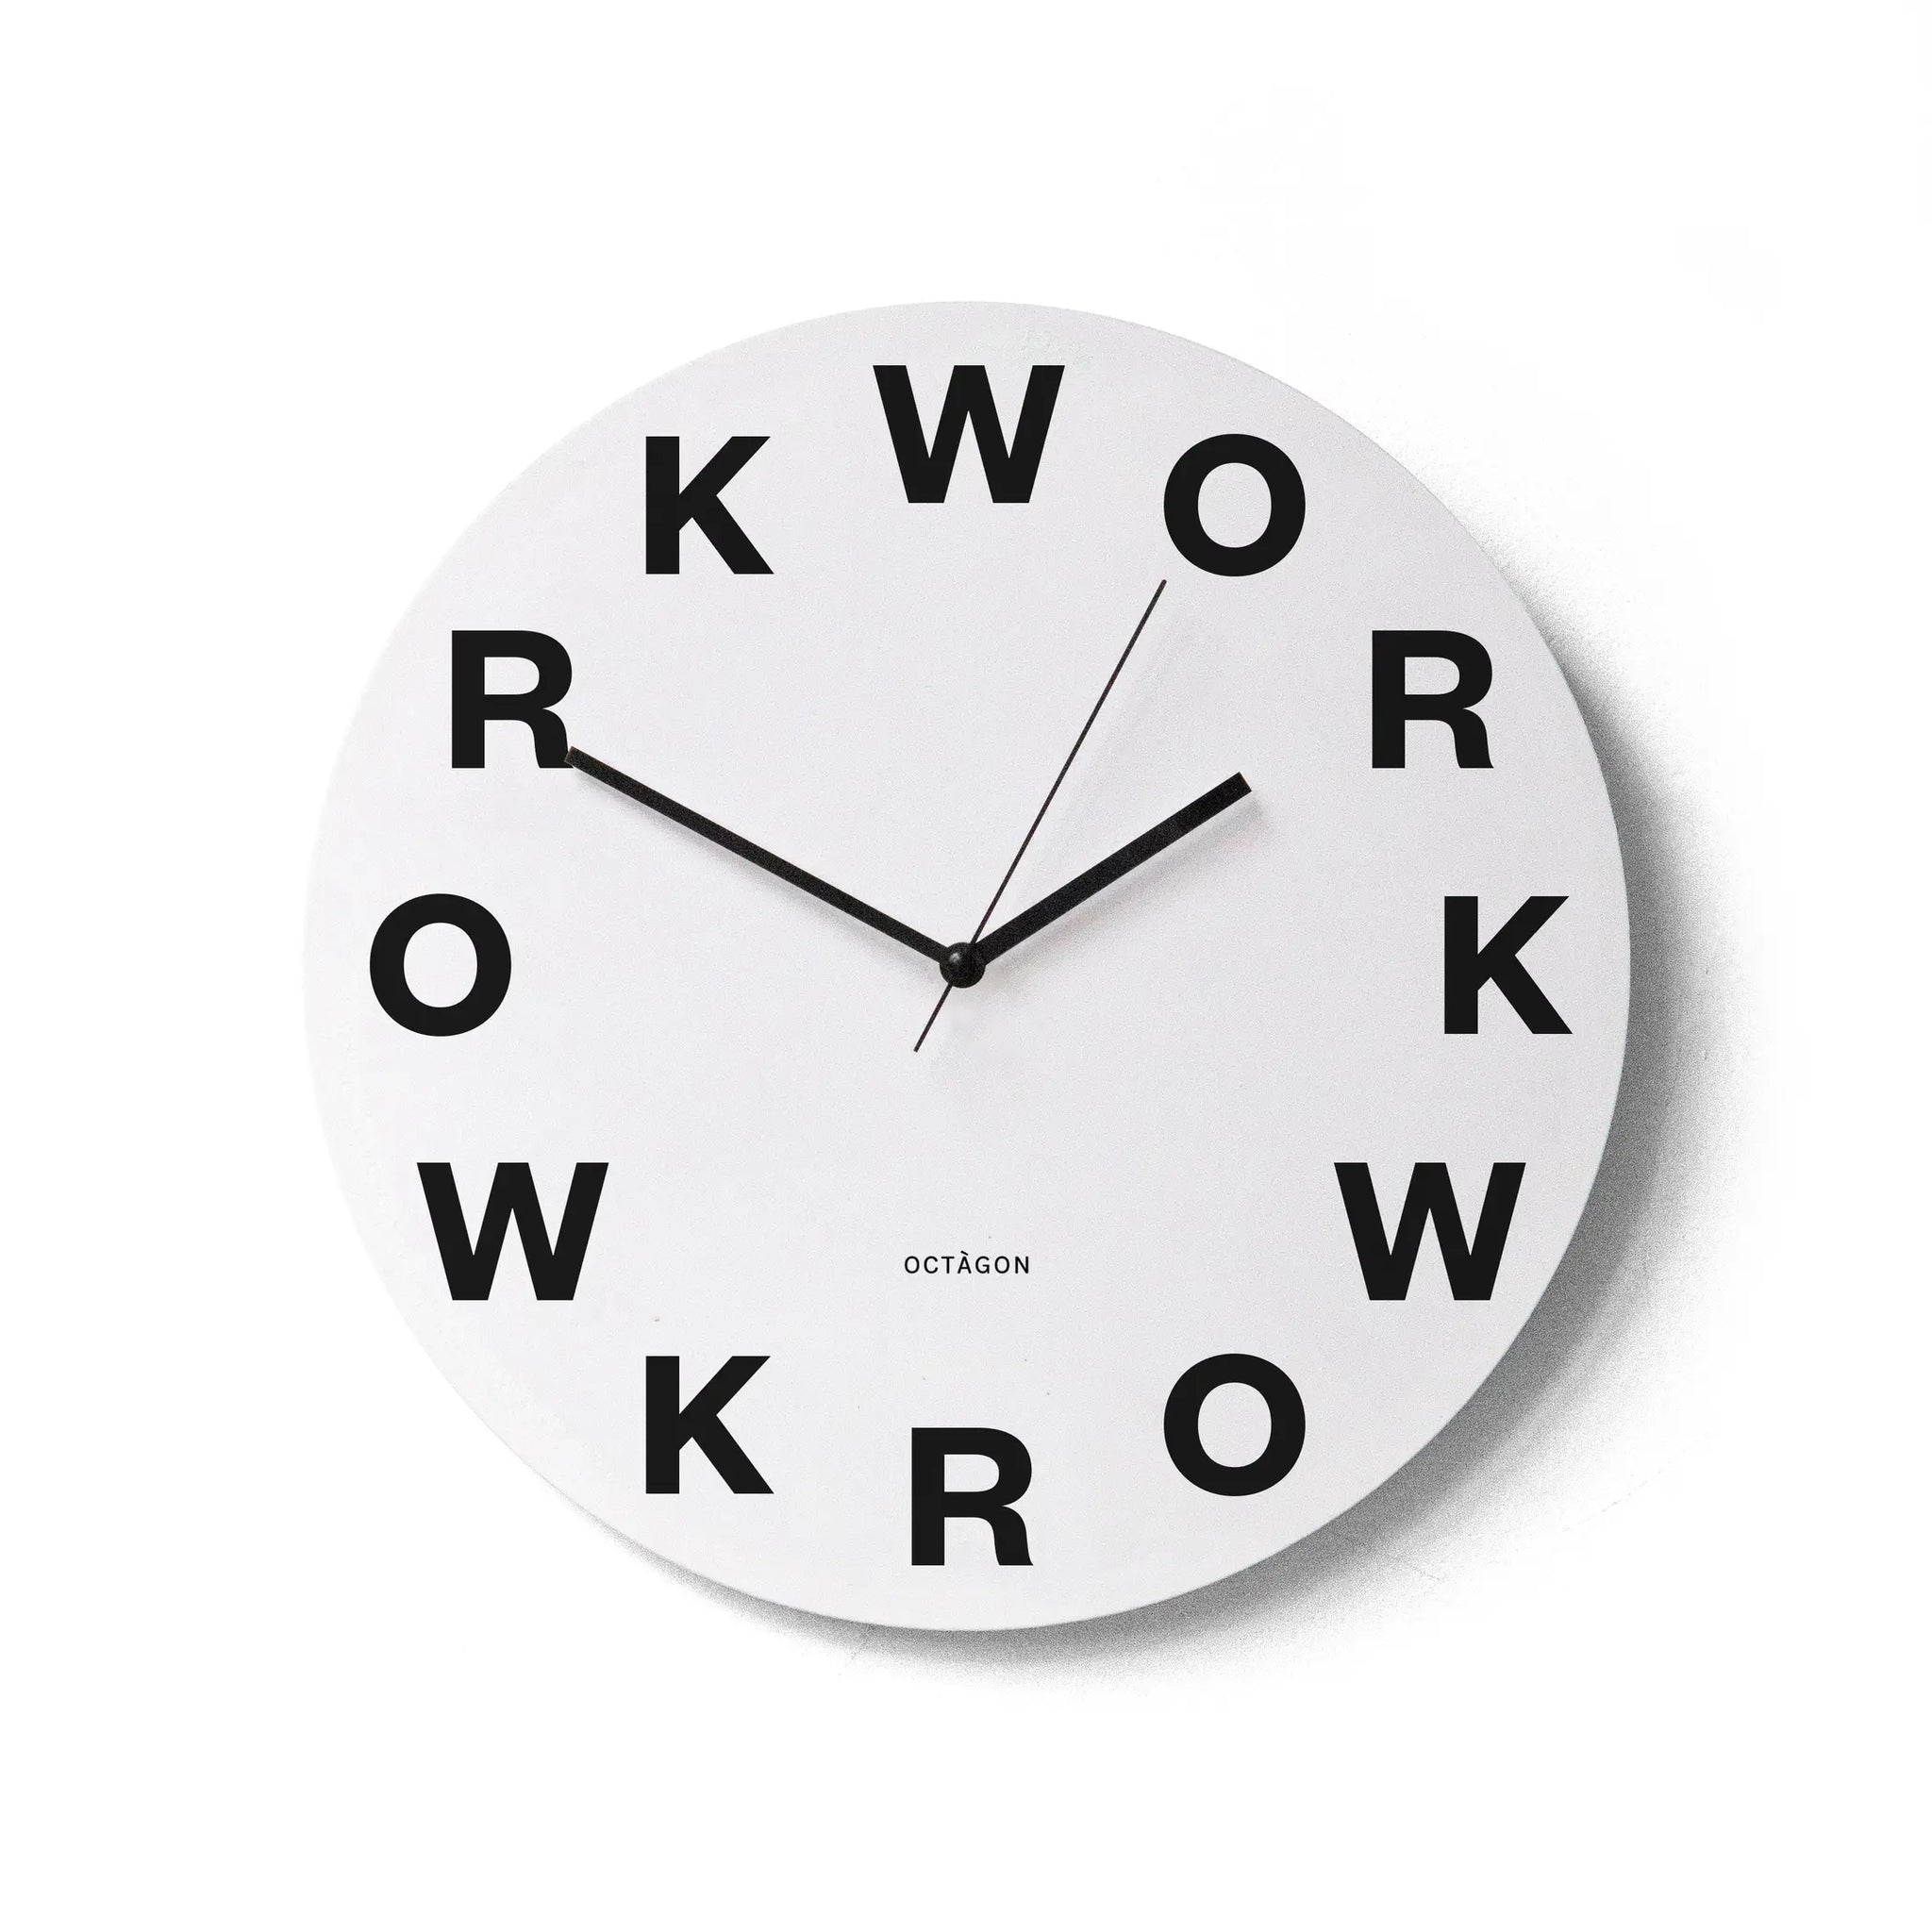 Work Octagon Clock